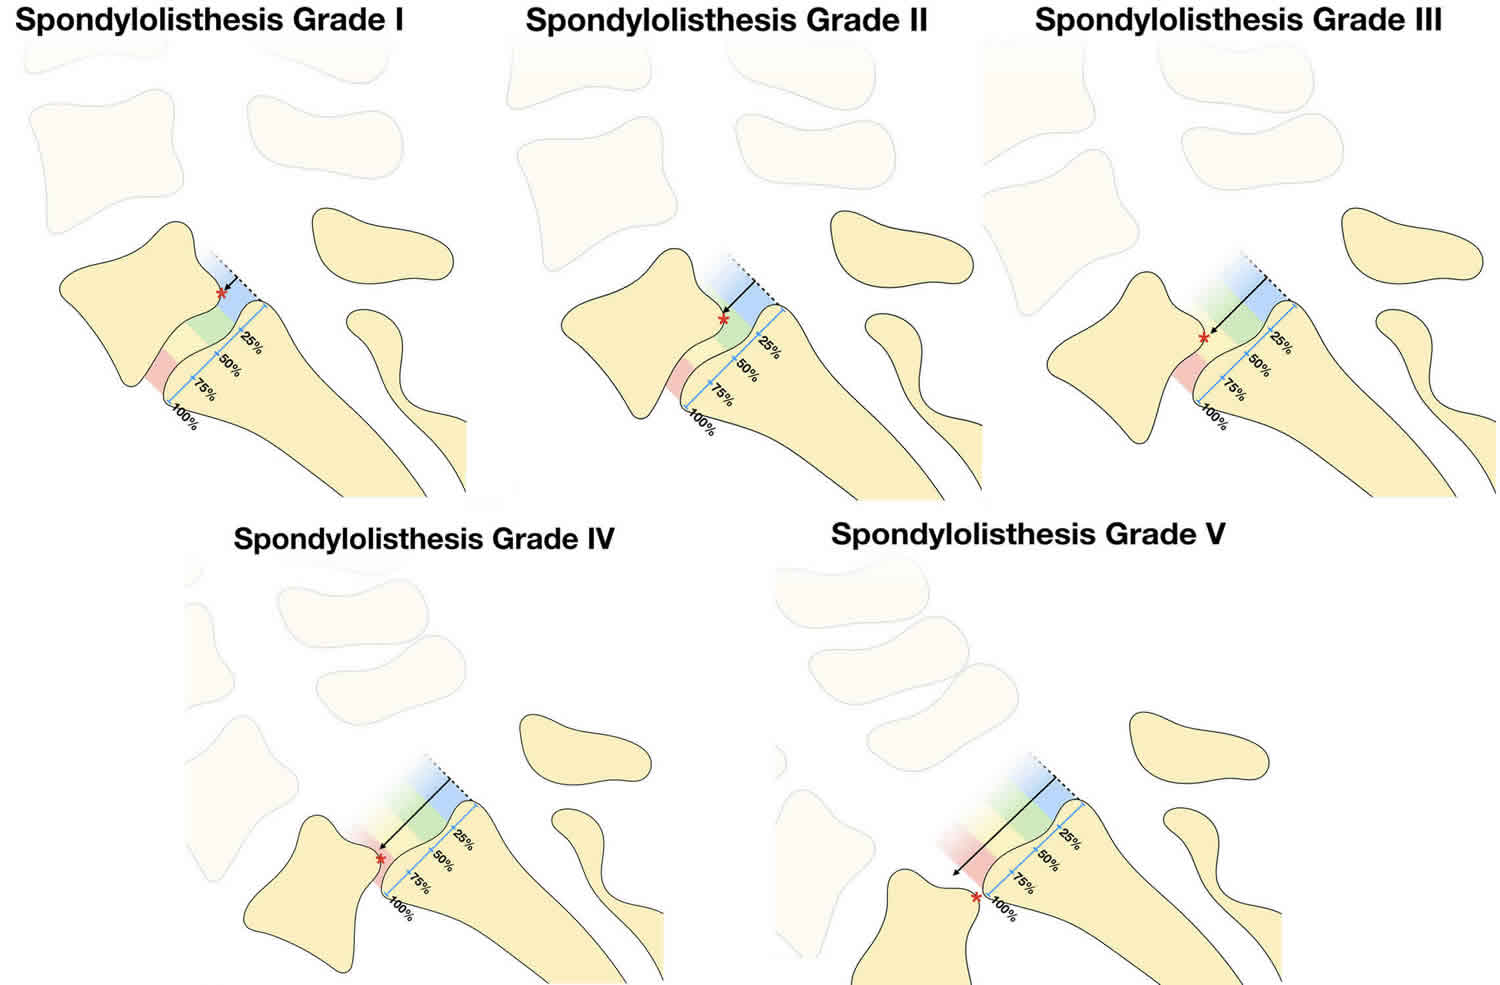 Spondylolisthesis grading